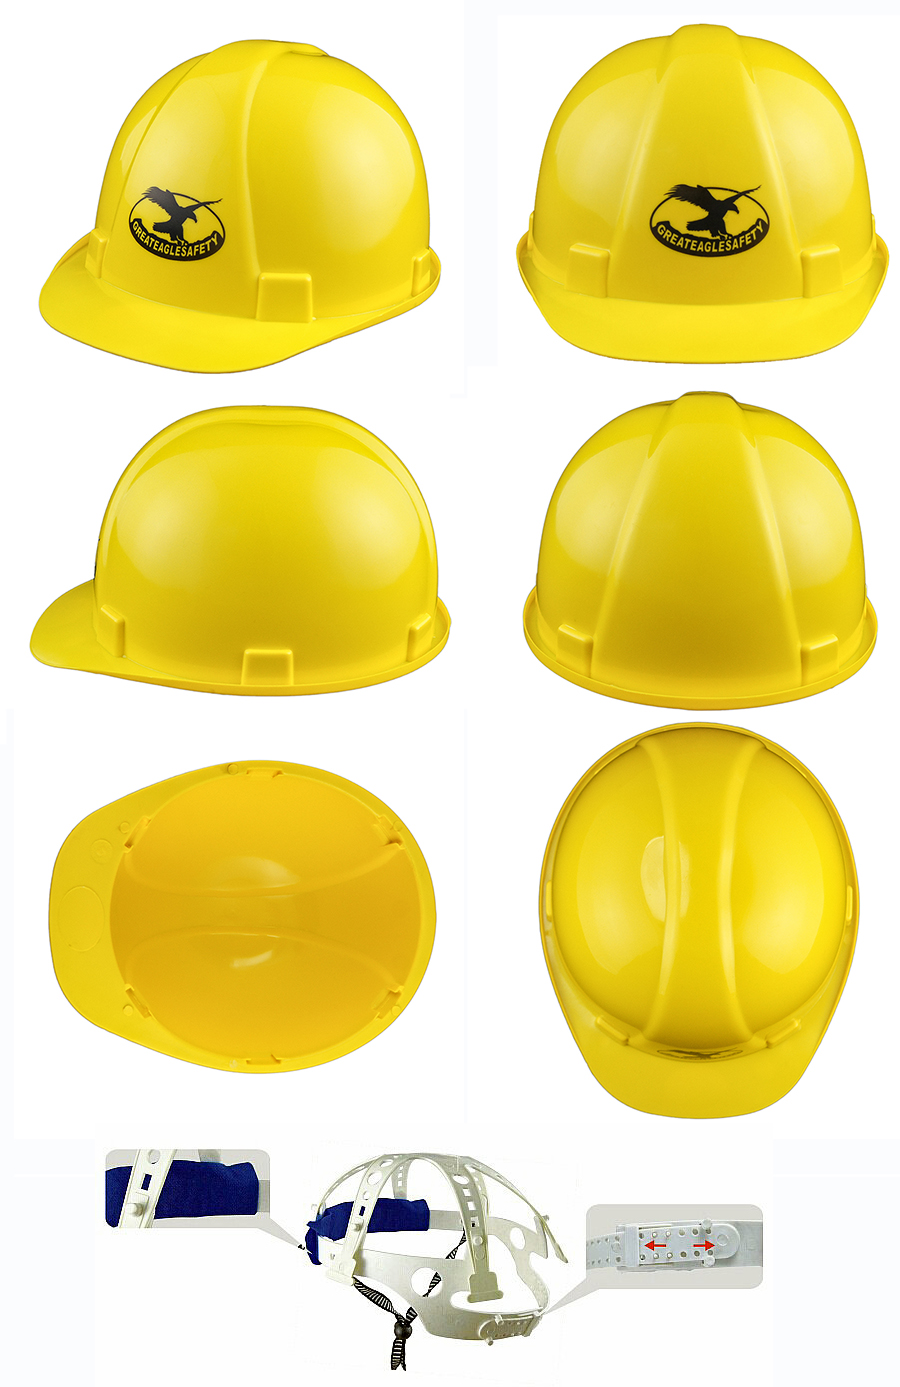 Economical Safety Helmet